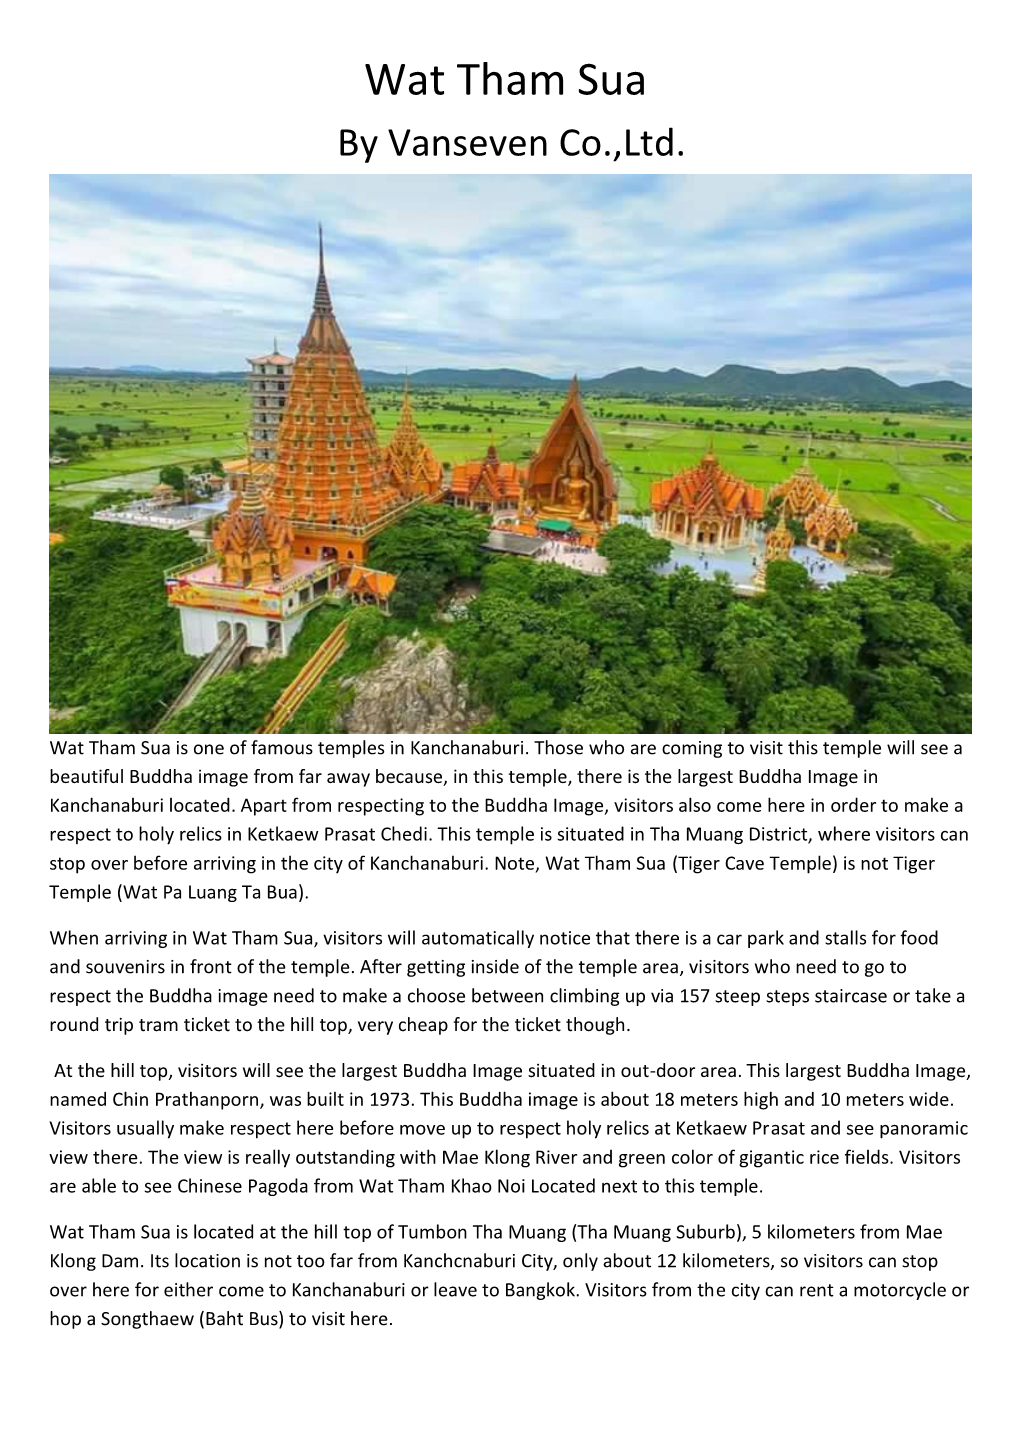 Wat Tham Sua by Vanseven Co.,Ltd